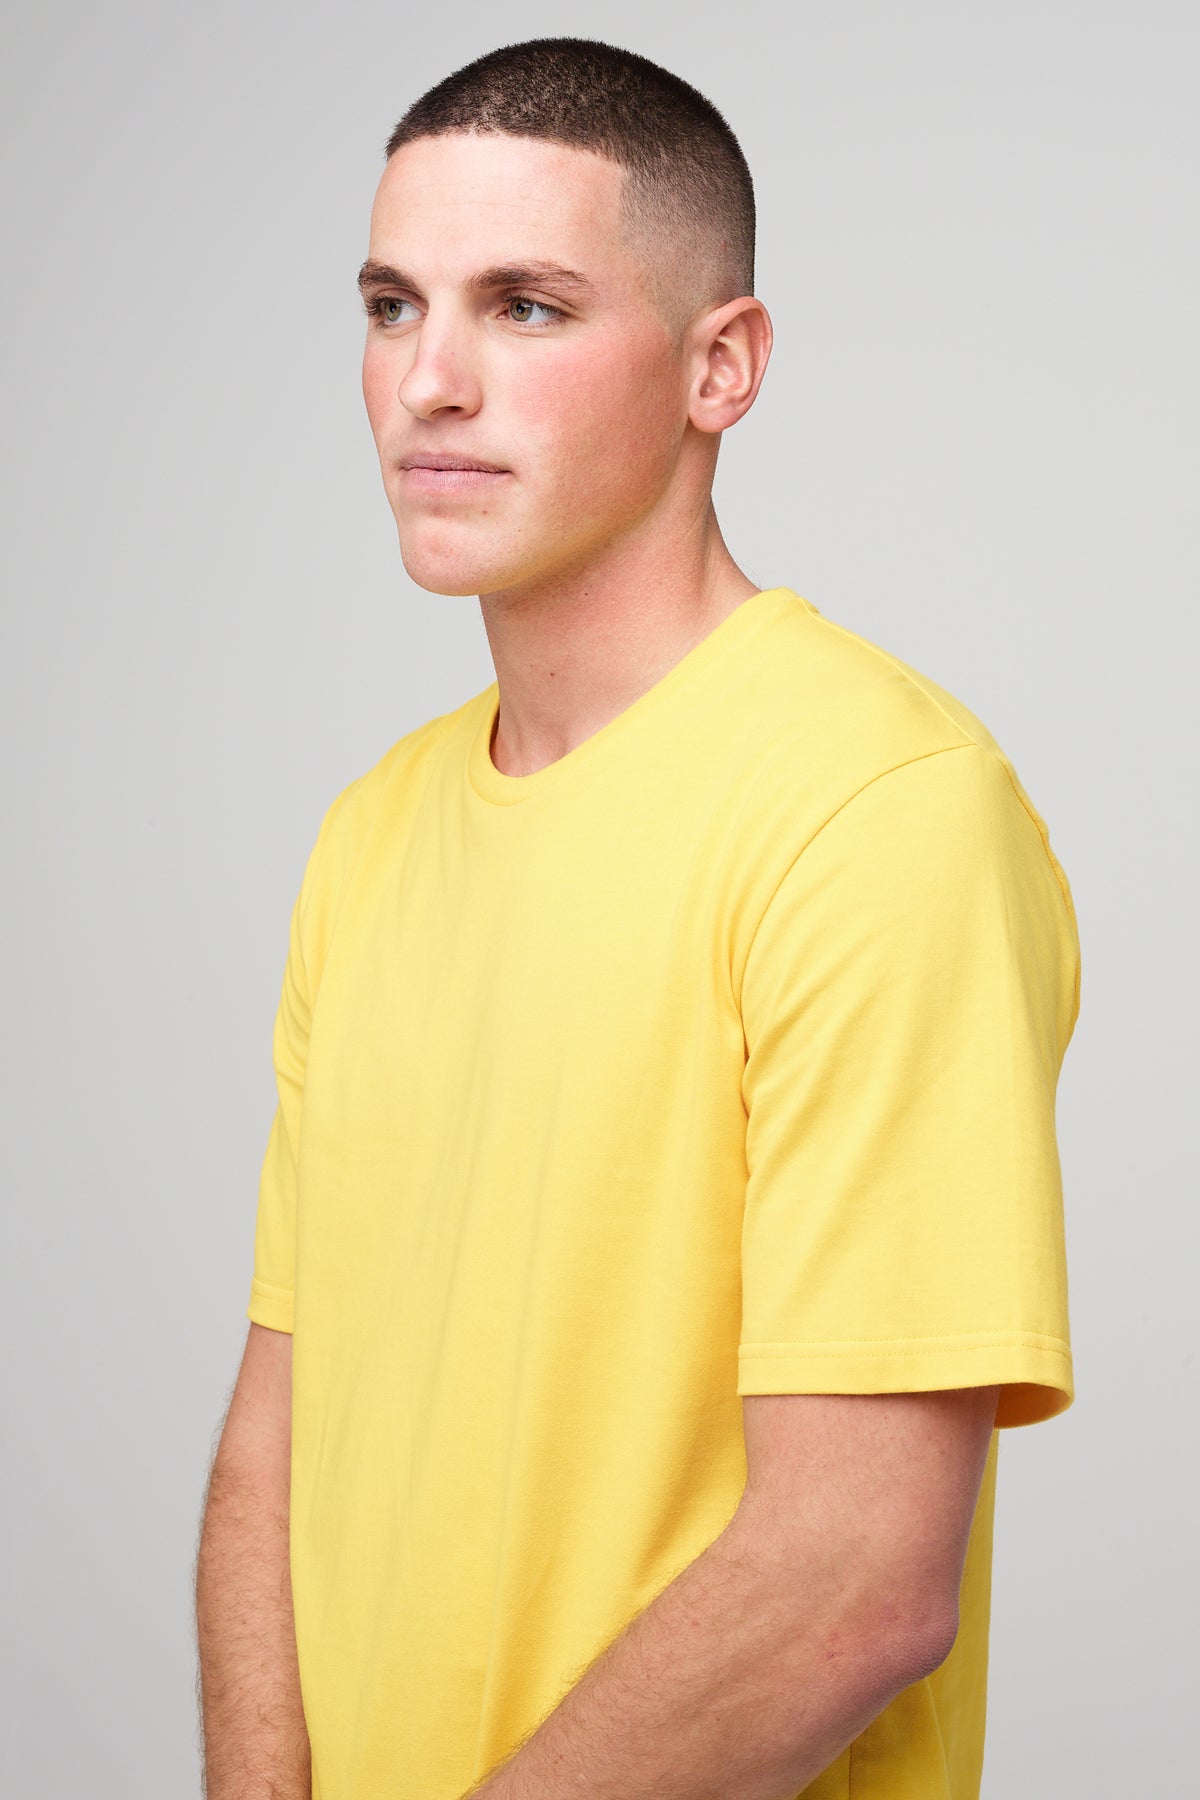 
            Brunet, white male in sunshine yellow short sleeve t-shirt 